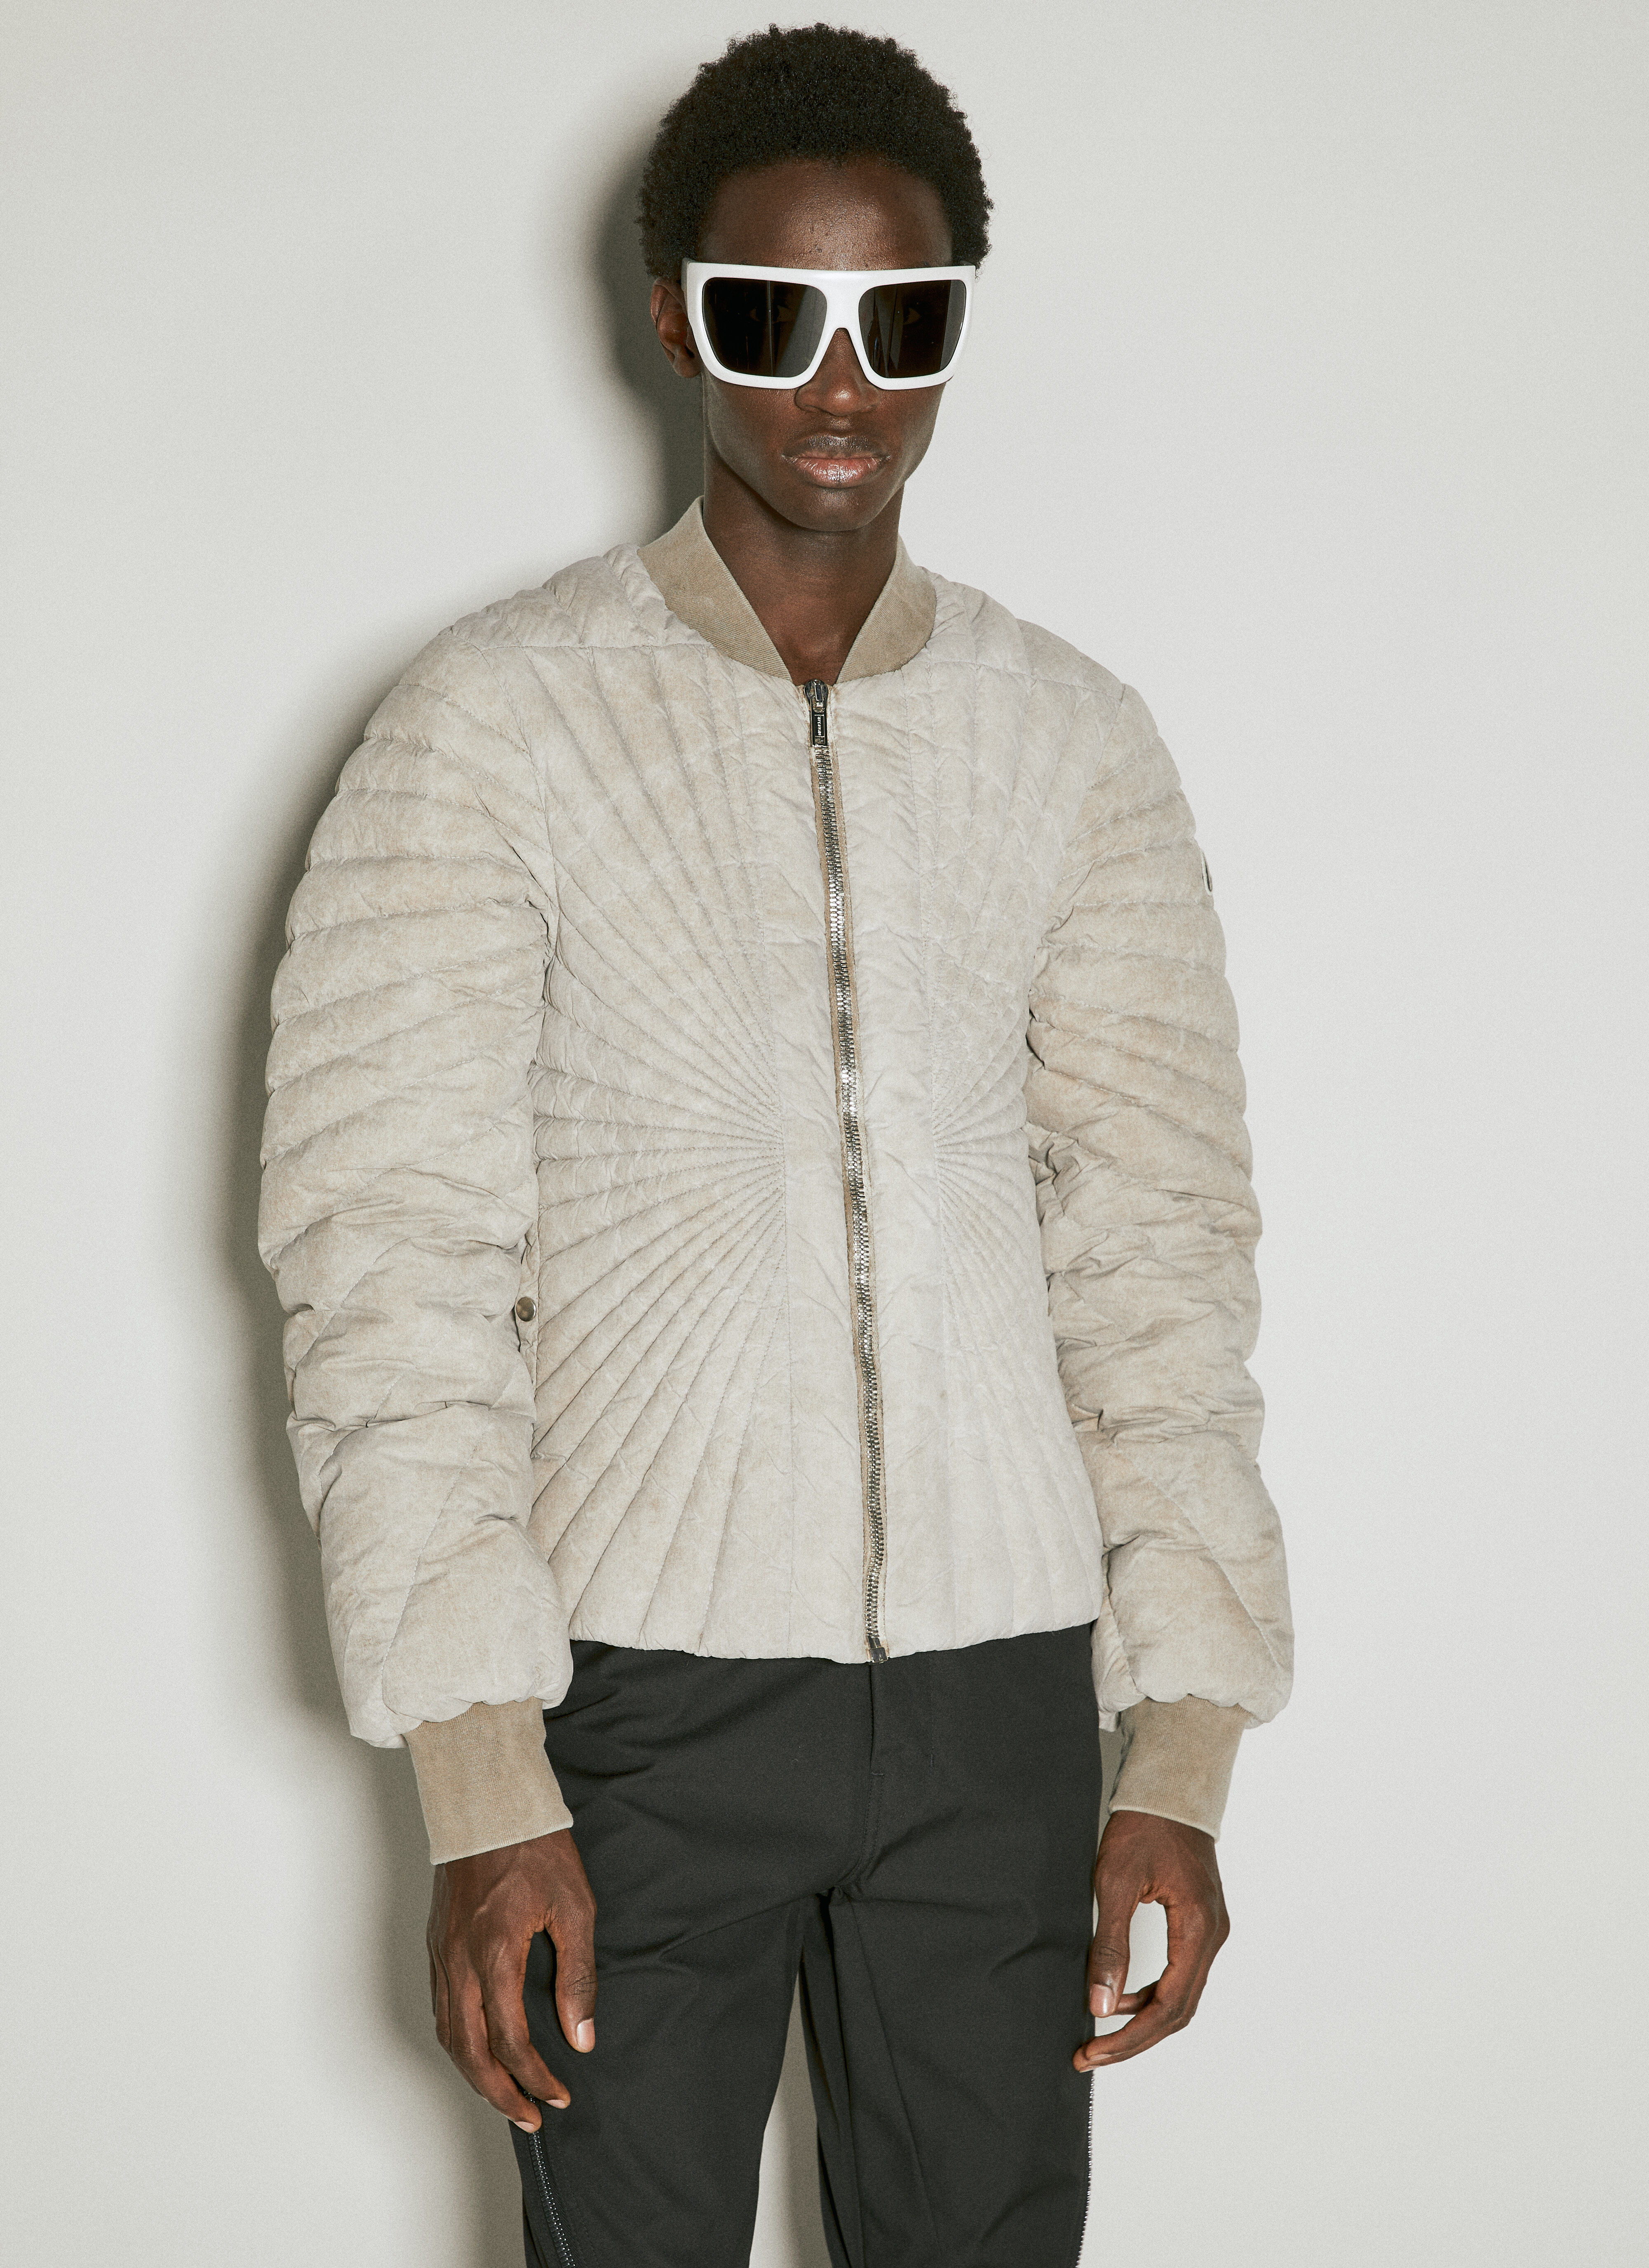 Moncler x Roc Nation designed by Jay-Z Radiance Down Flight Jacket Black mrn0156002